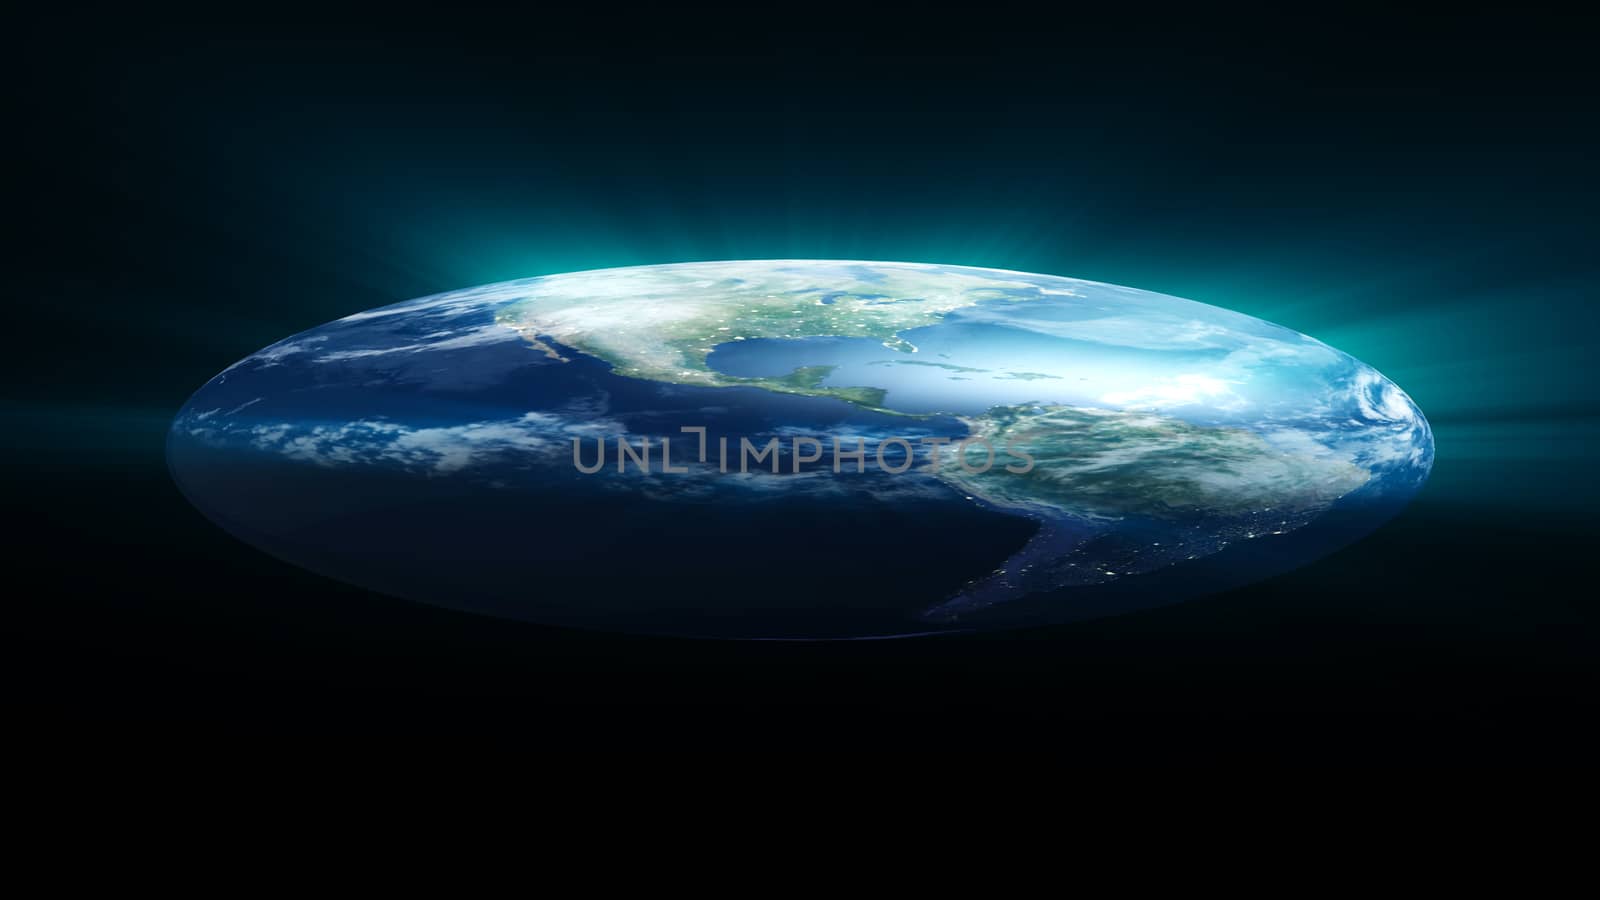 Flat Earth on black background. Digital illustration by nolimit046